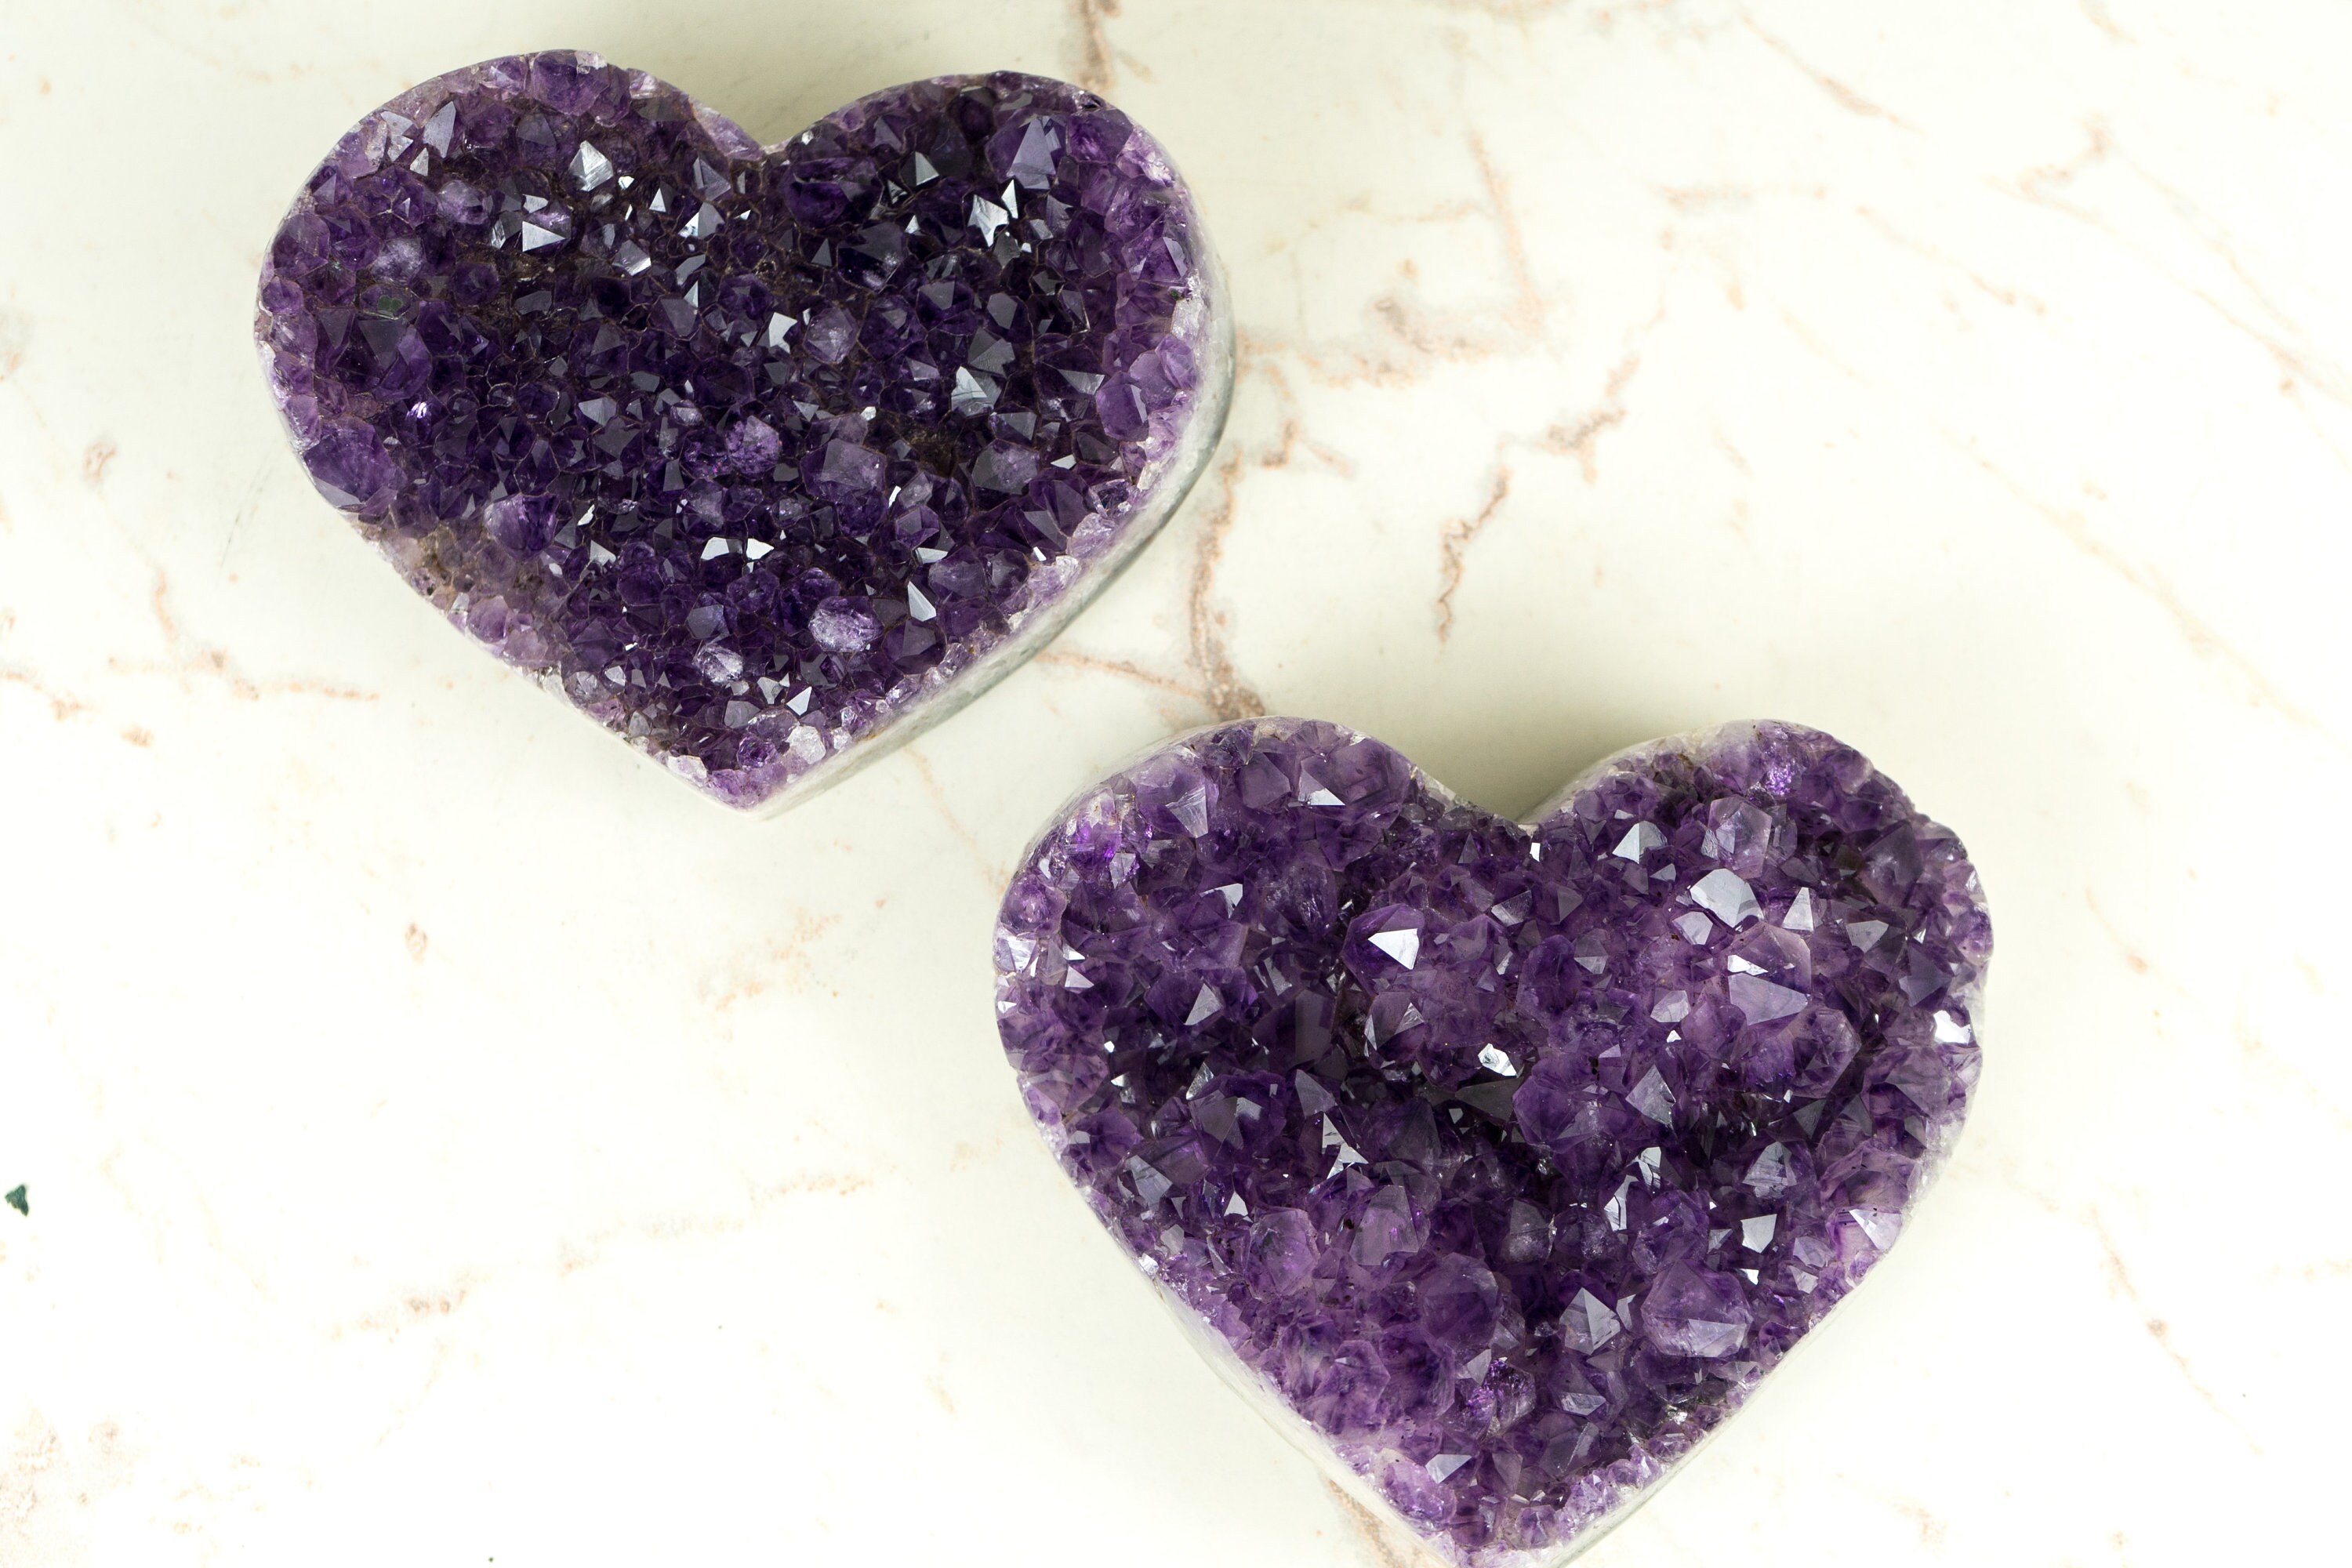 Set of 2 High-Grade Amethyst Hearts, Natural, Deep Purple Amethyst Hearts, Wholesale Flat Box - 2.0 Kg - 4.5 lbthumbnail